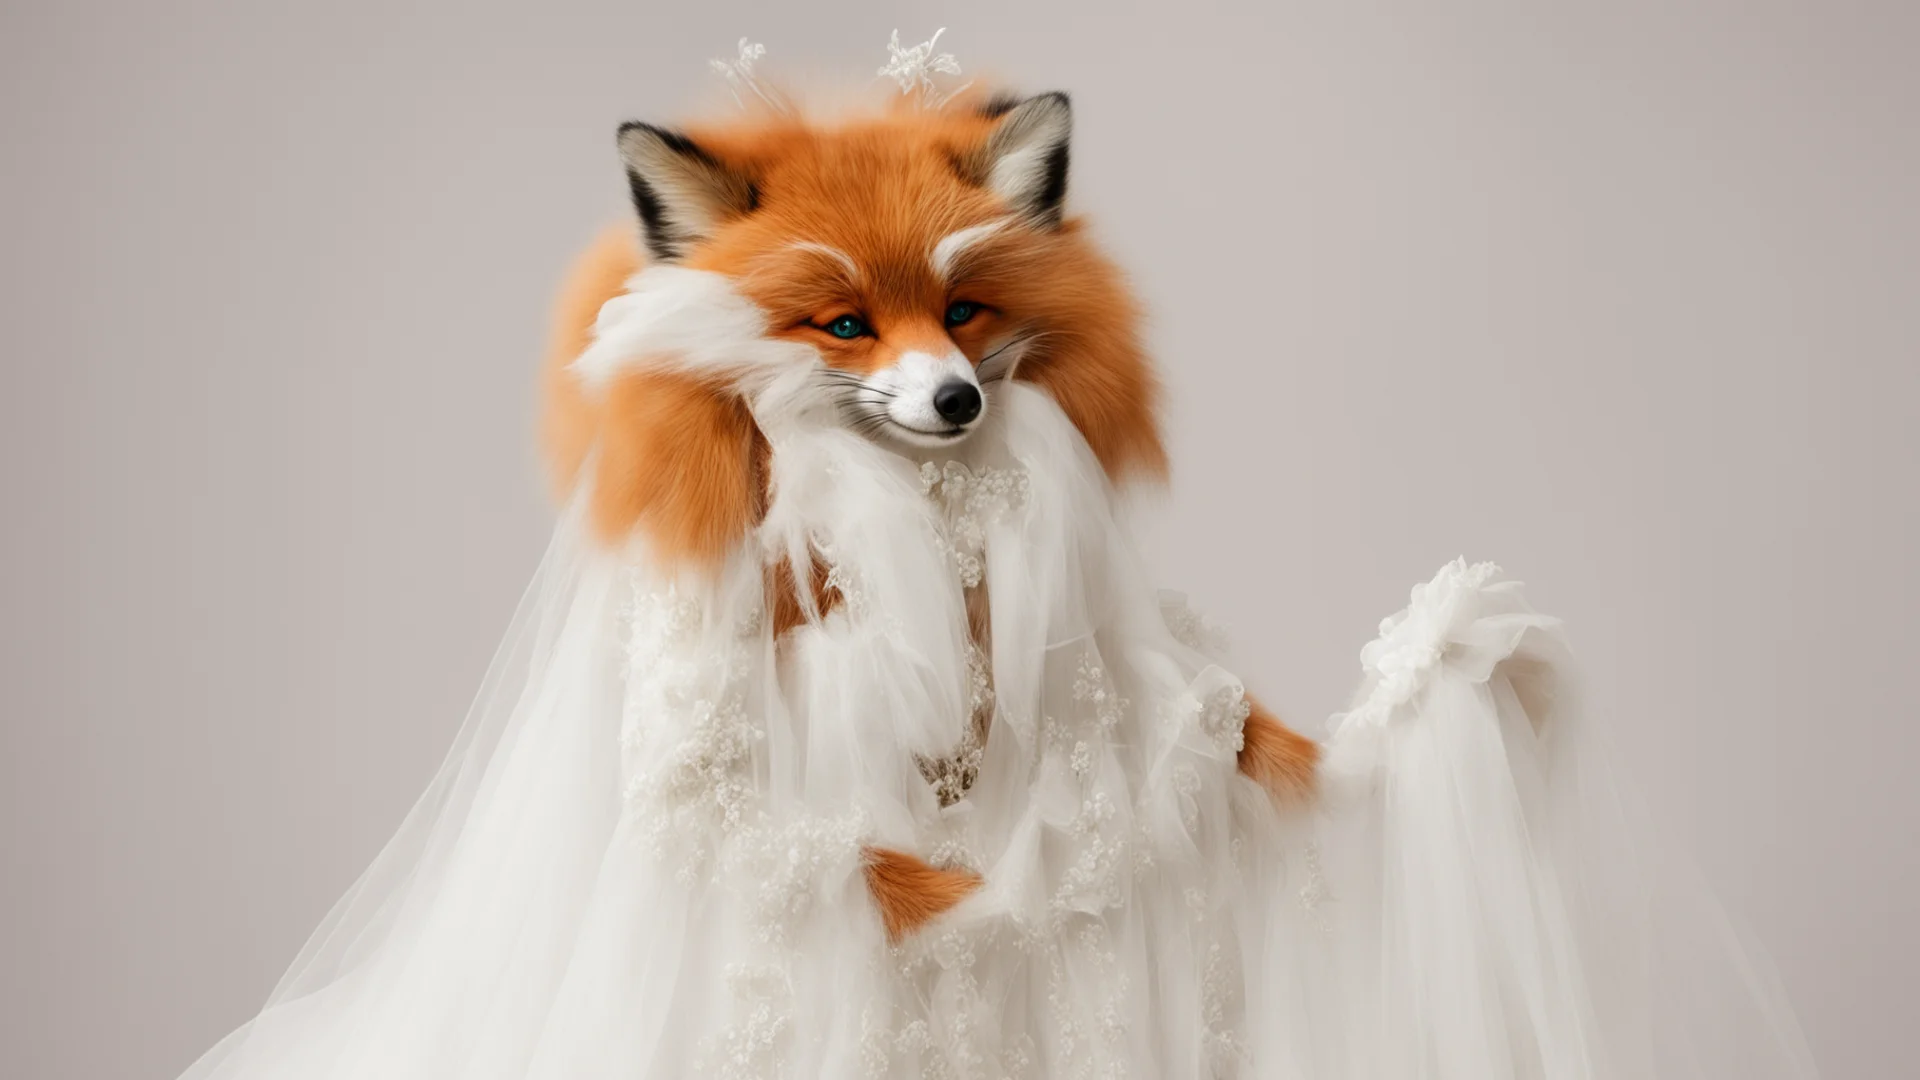 amazing fox furry bride awesome portrait 2 wide